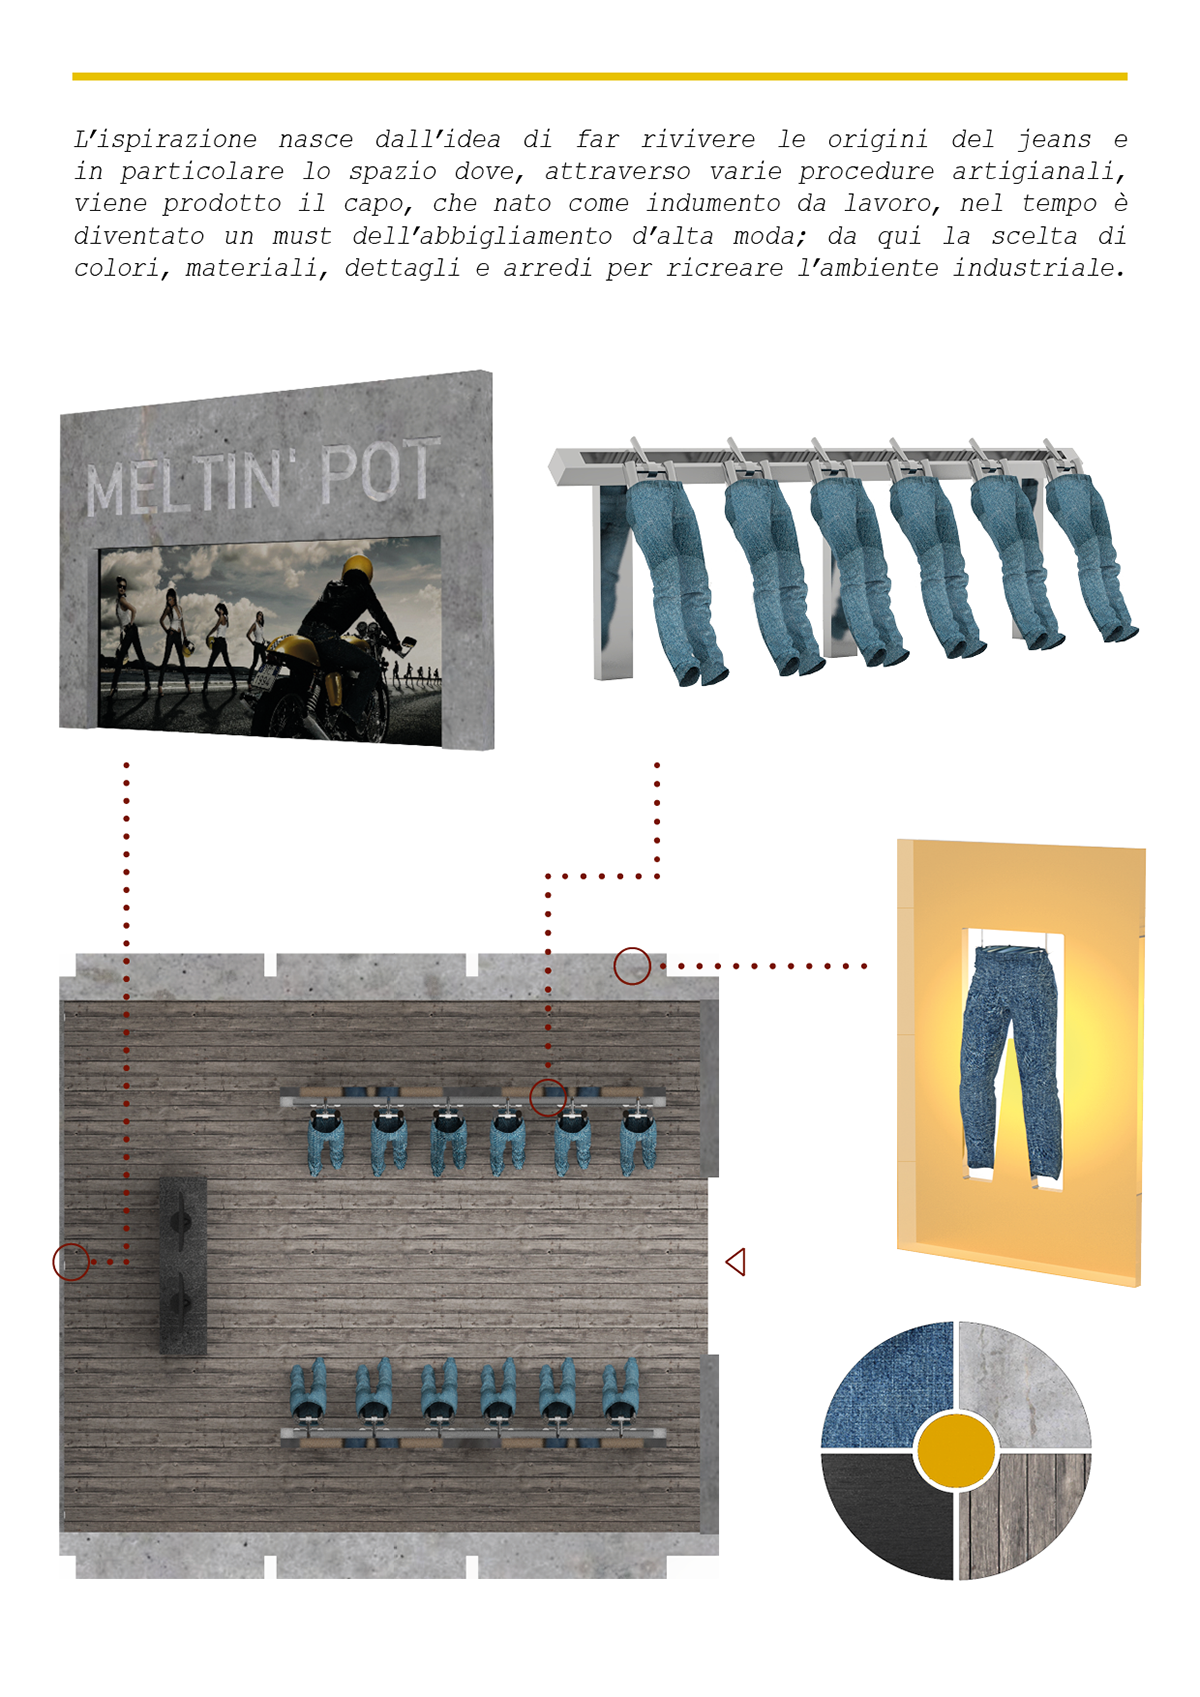 interio design architecture concept Meltin'Pot design product design  industrial design  Project 3D model rendering